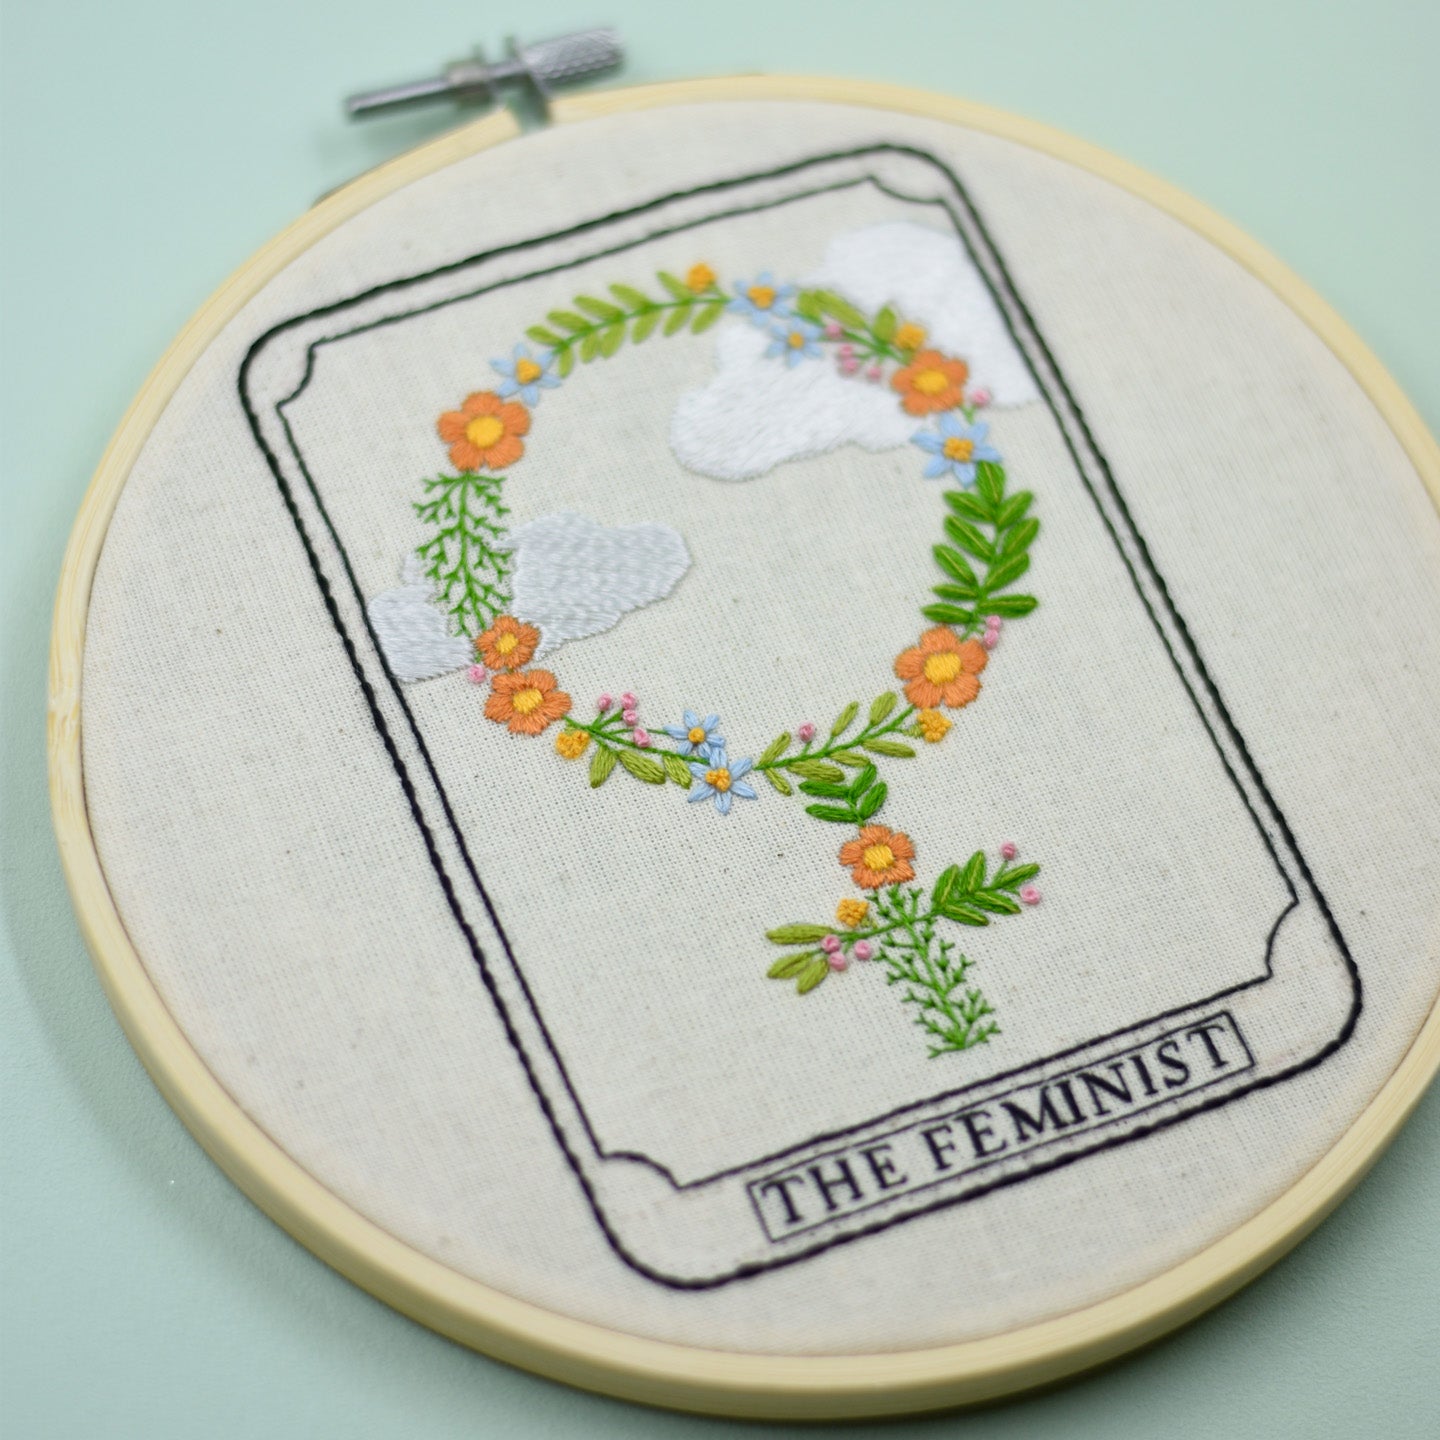 The Feminist Tarot Digital Embroidery Pattern